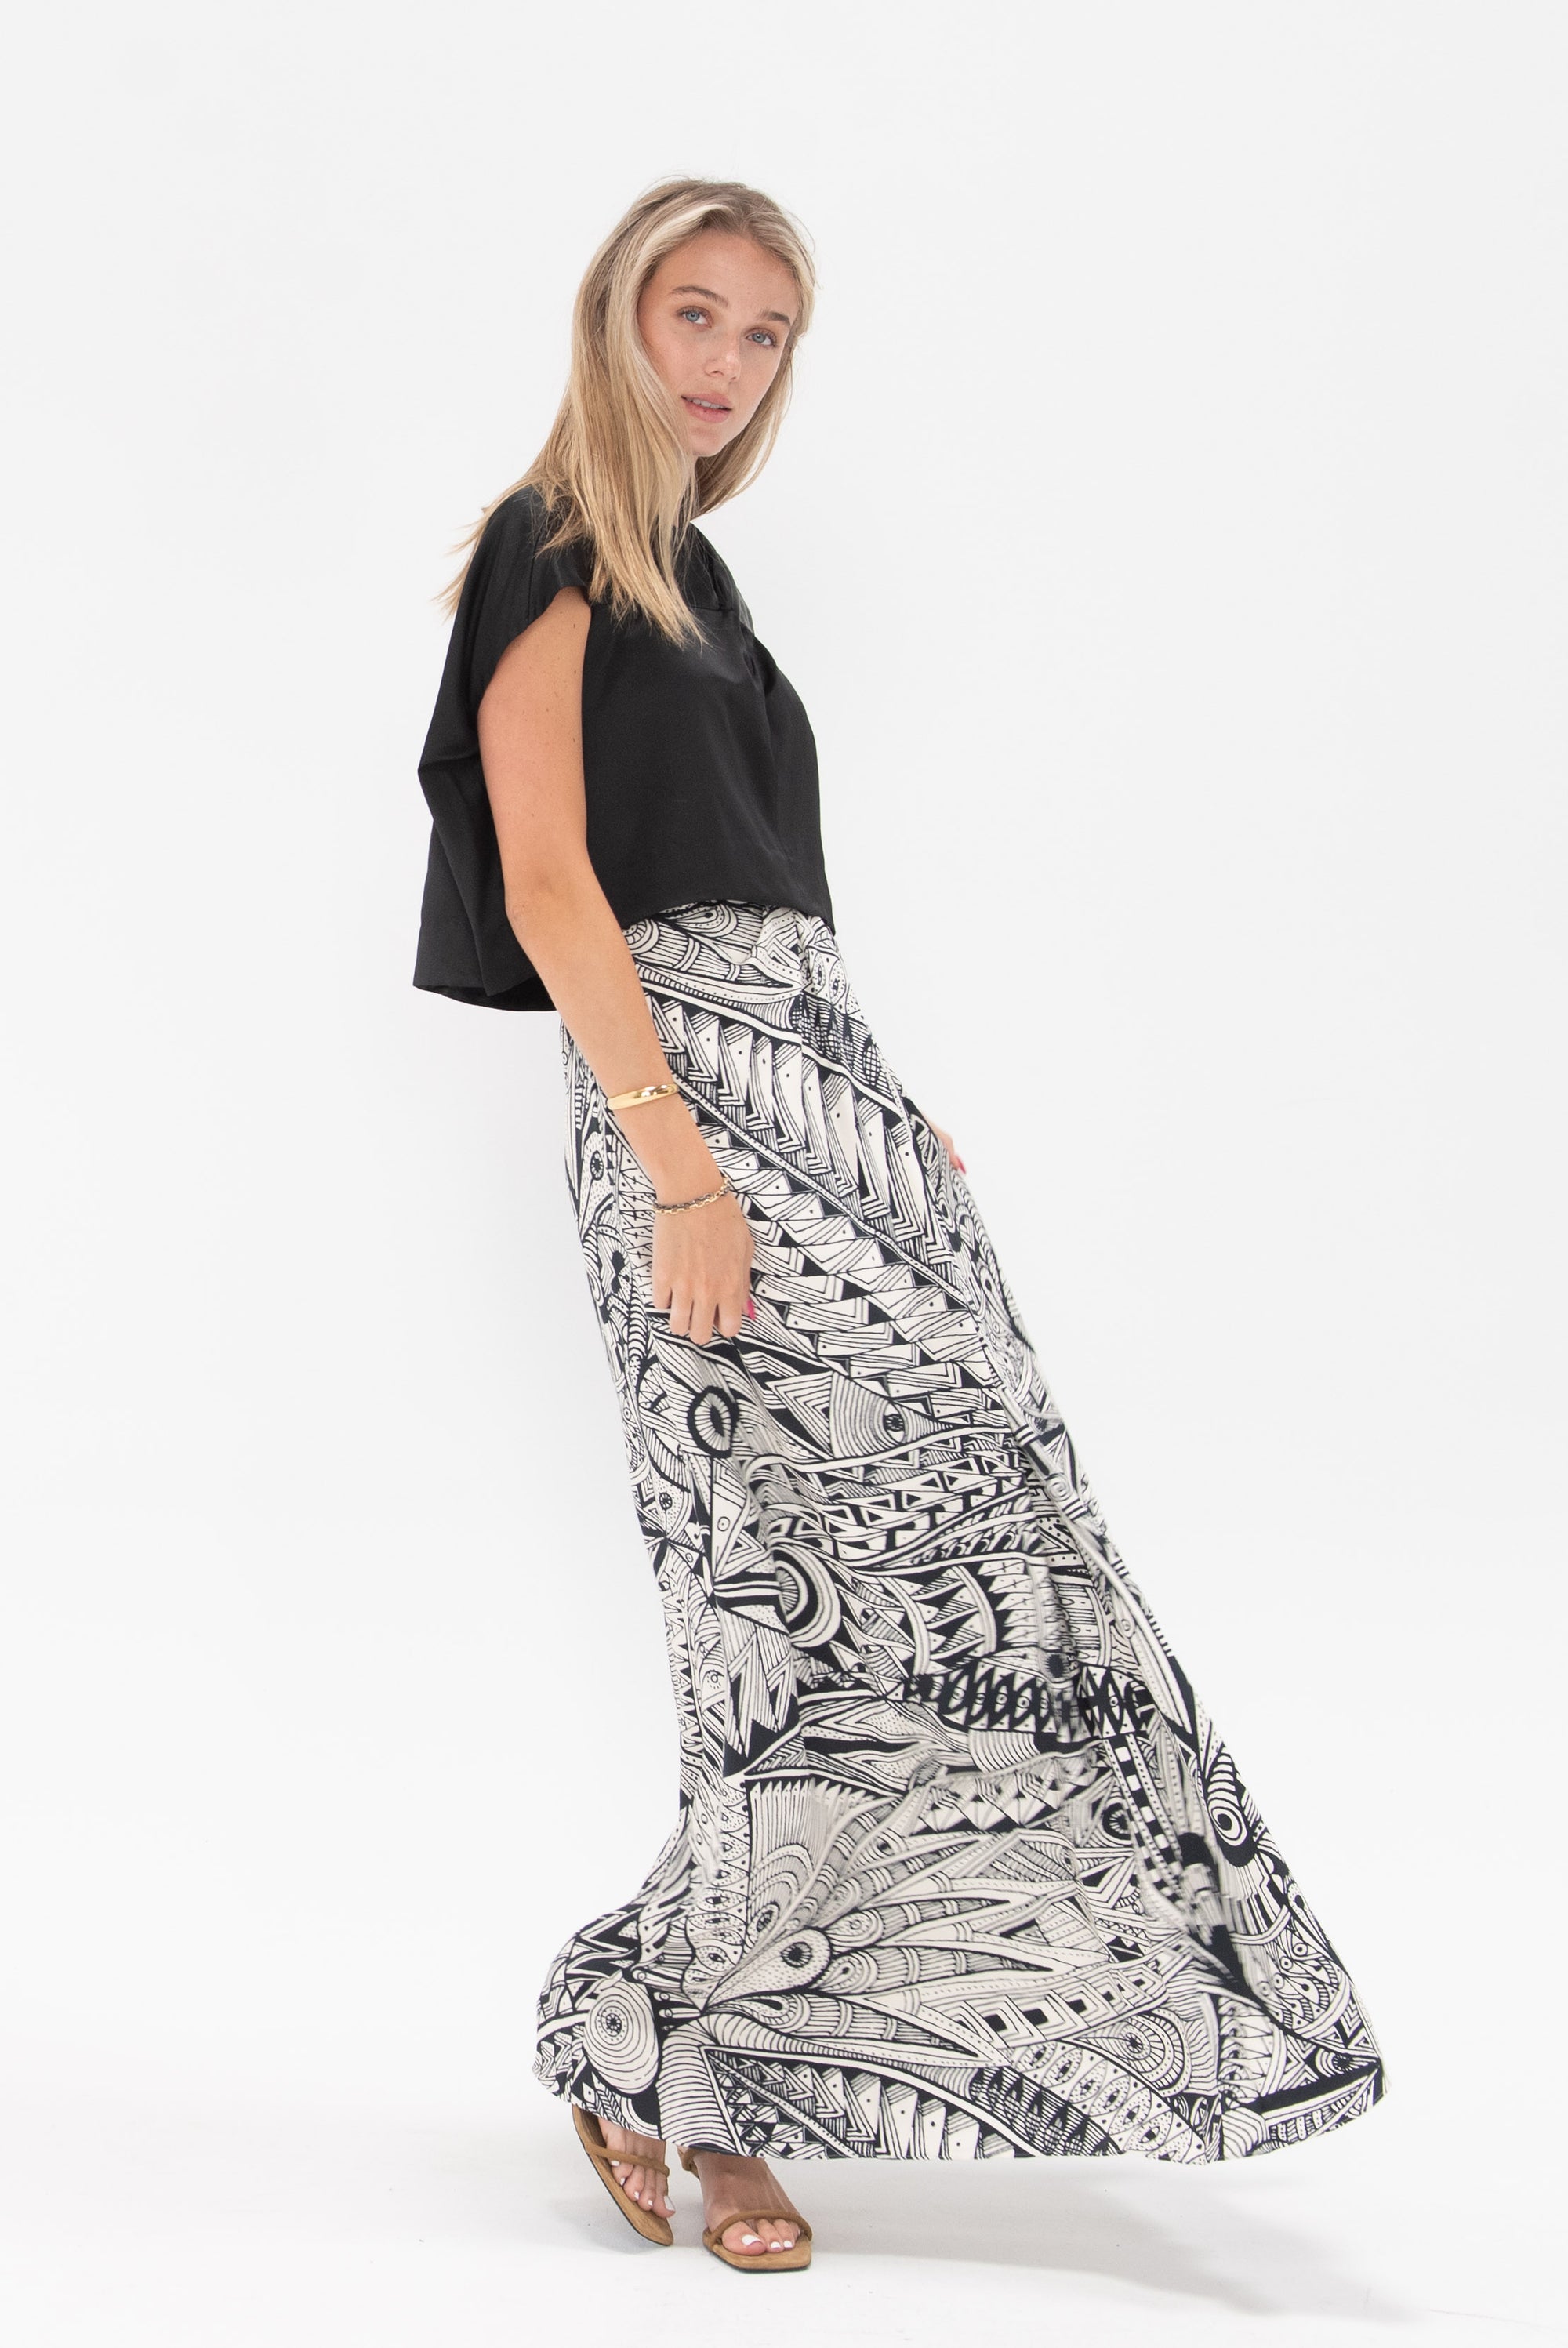 HEIRLOME - Leticia Skirt, Ivory & Black